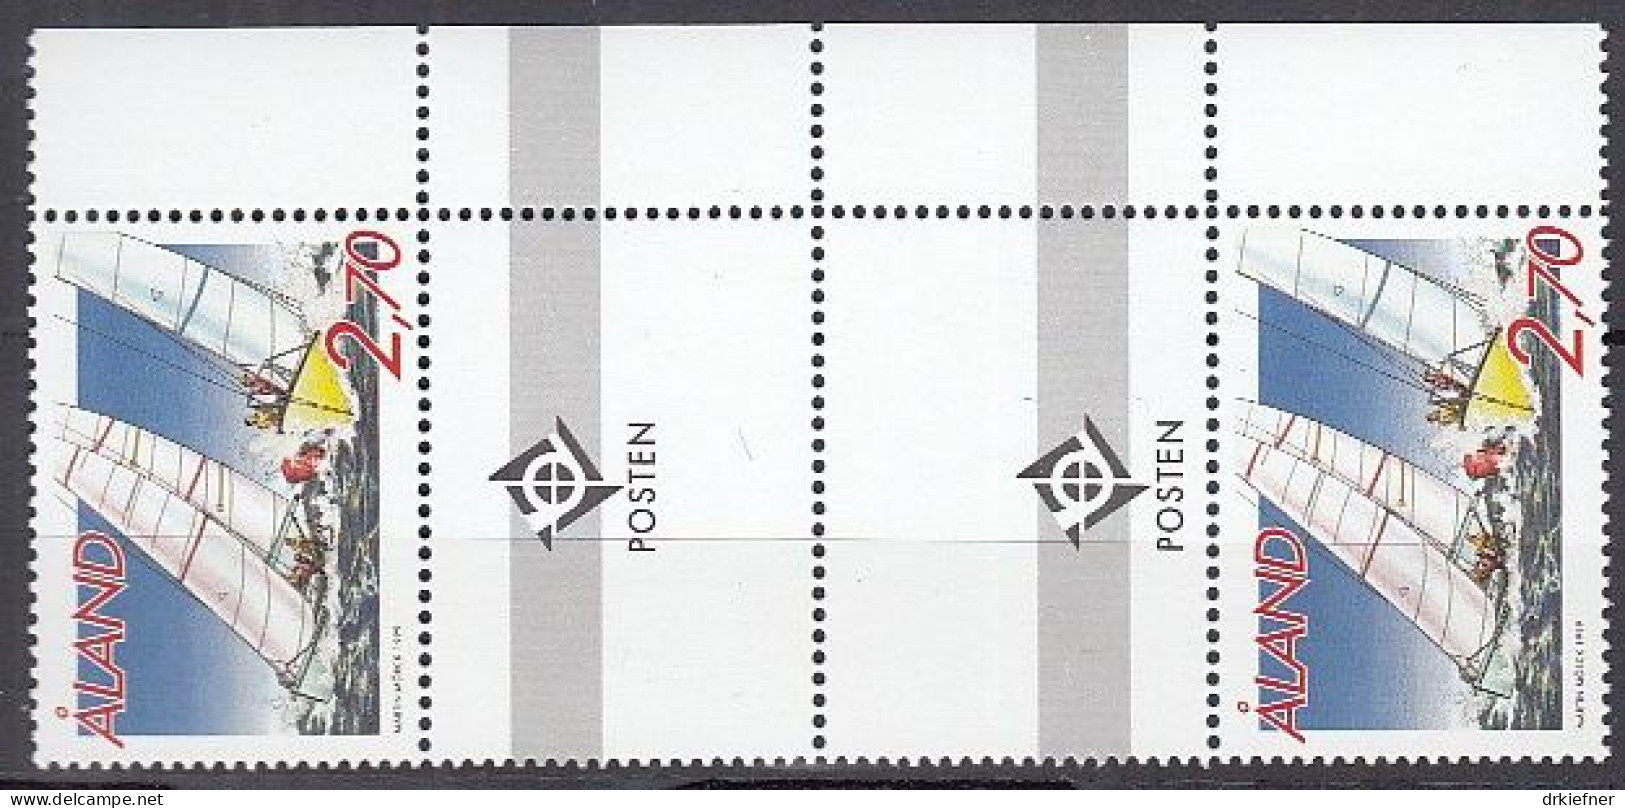 ALAND  158, Mit Doppel-Zierfeld, Postfrisch **, Segelsport, 1999 - Ålandinseln